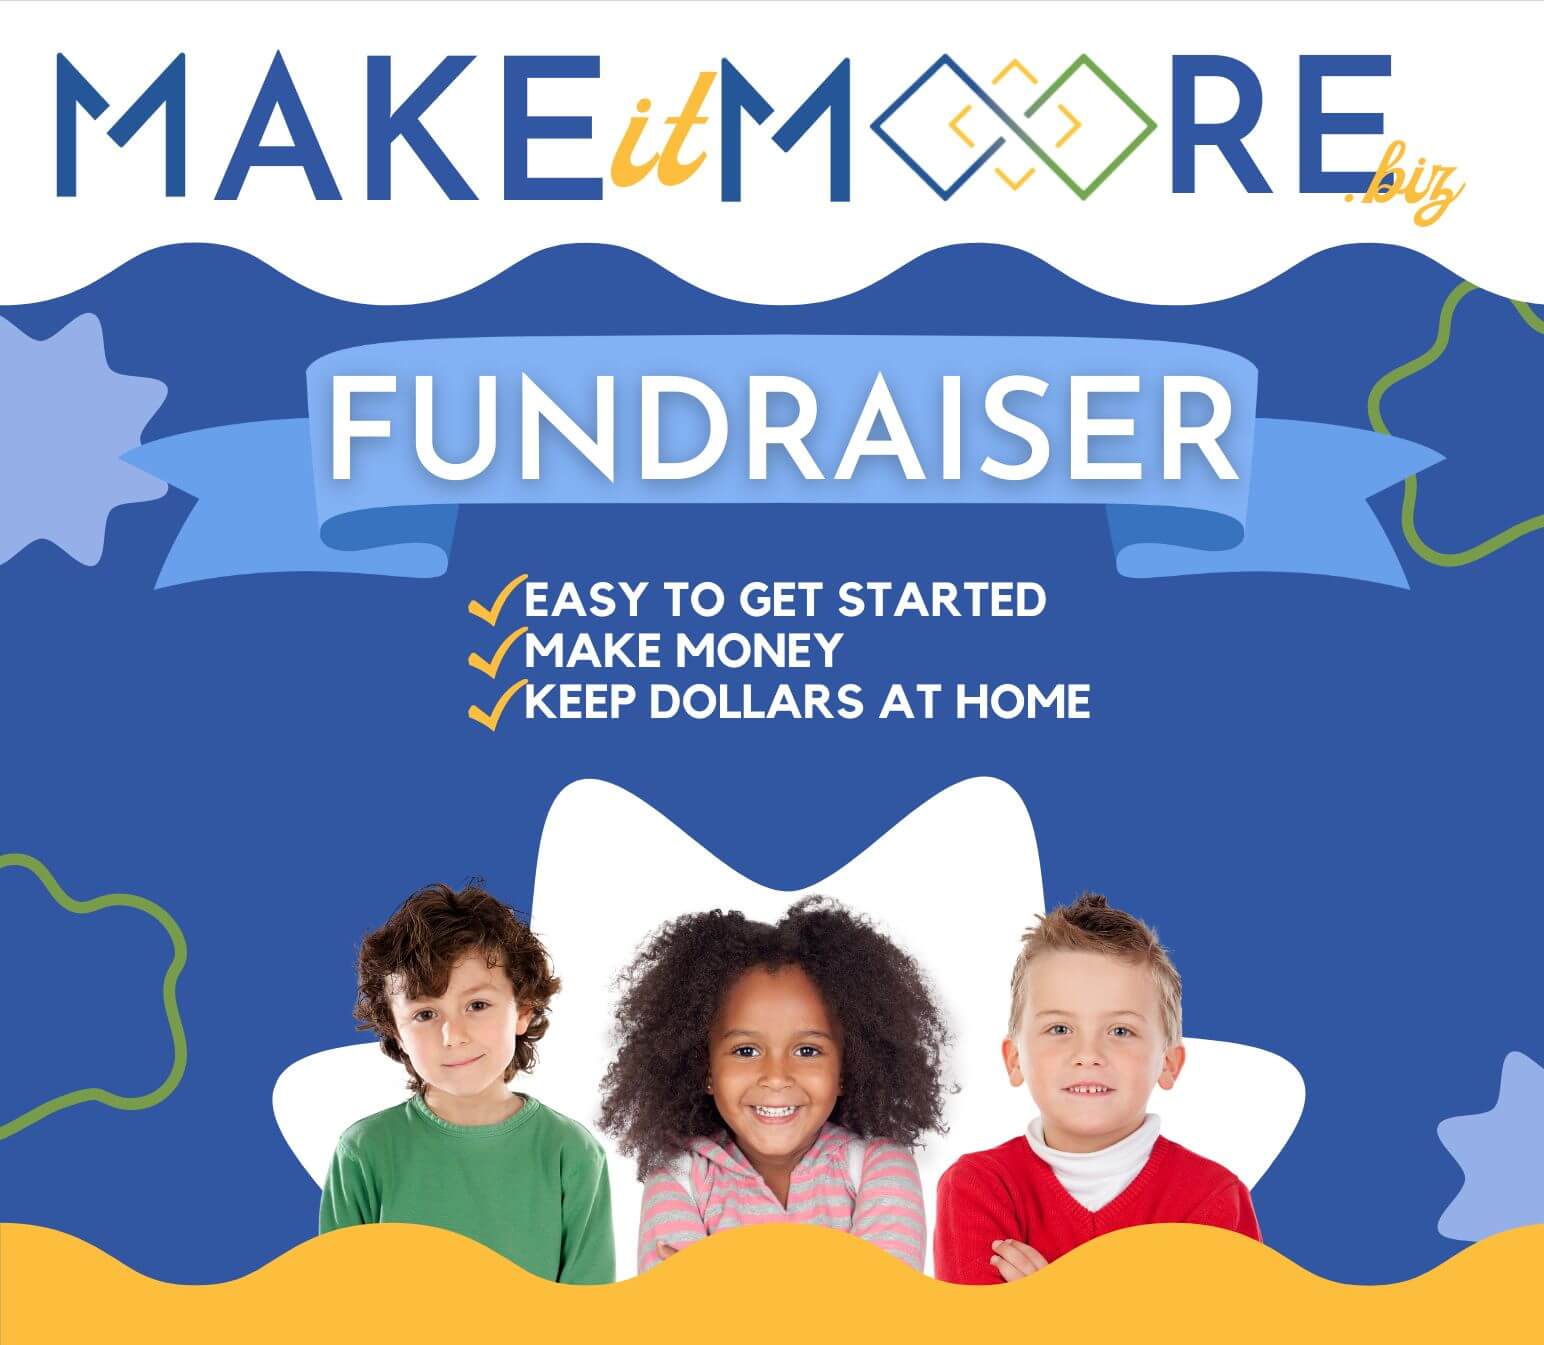 Make It Moore Card Fundraiser Image